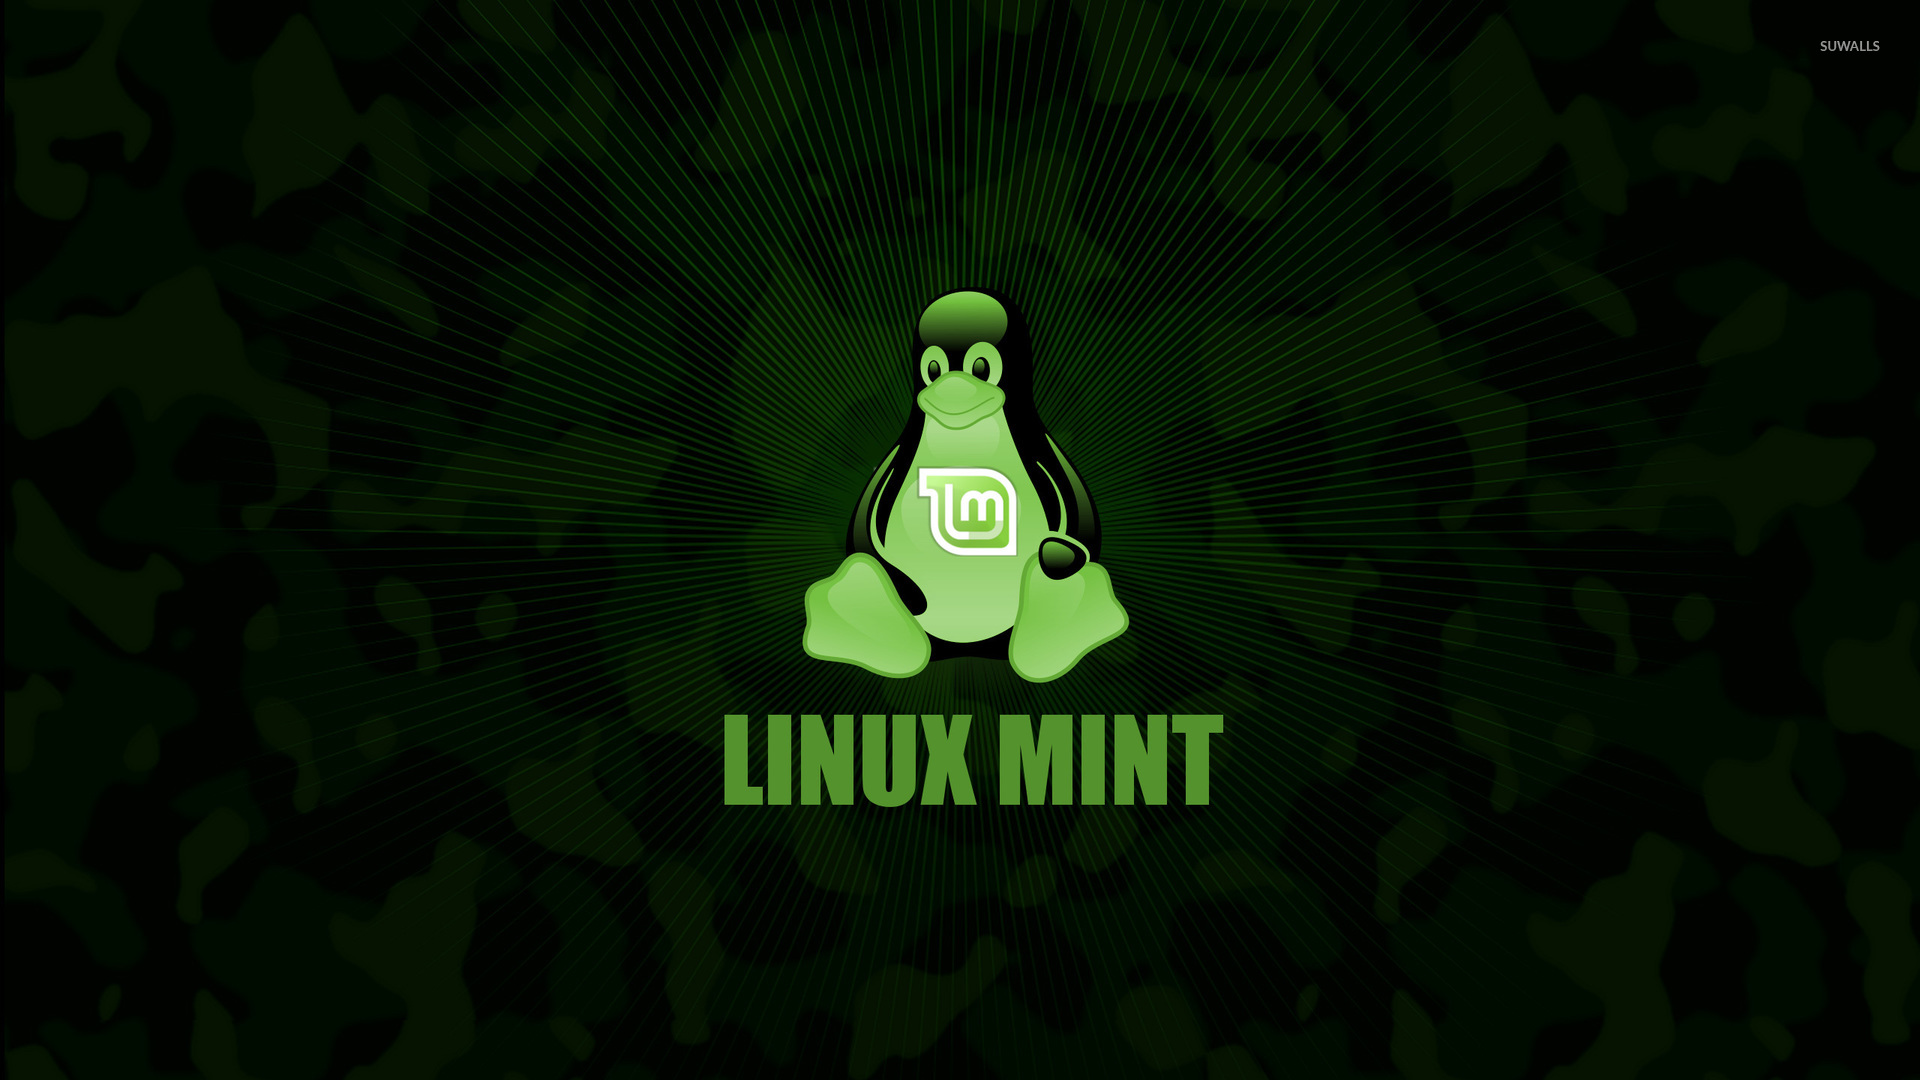 Linux Mint wallpaper   Computer wallpapers   8124